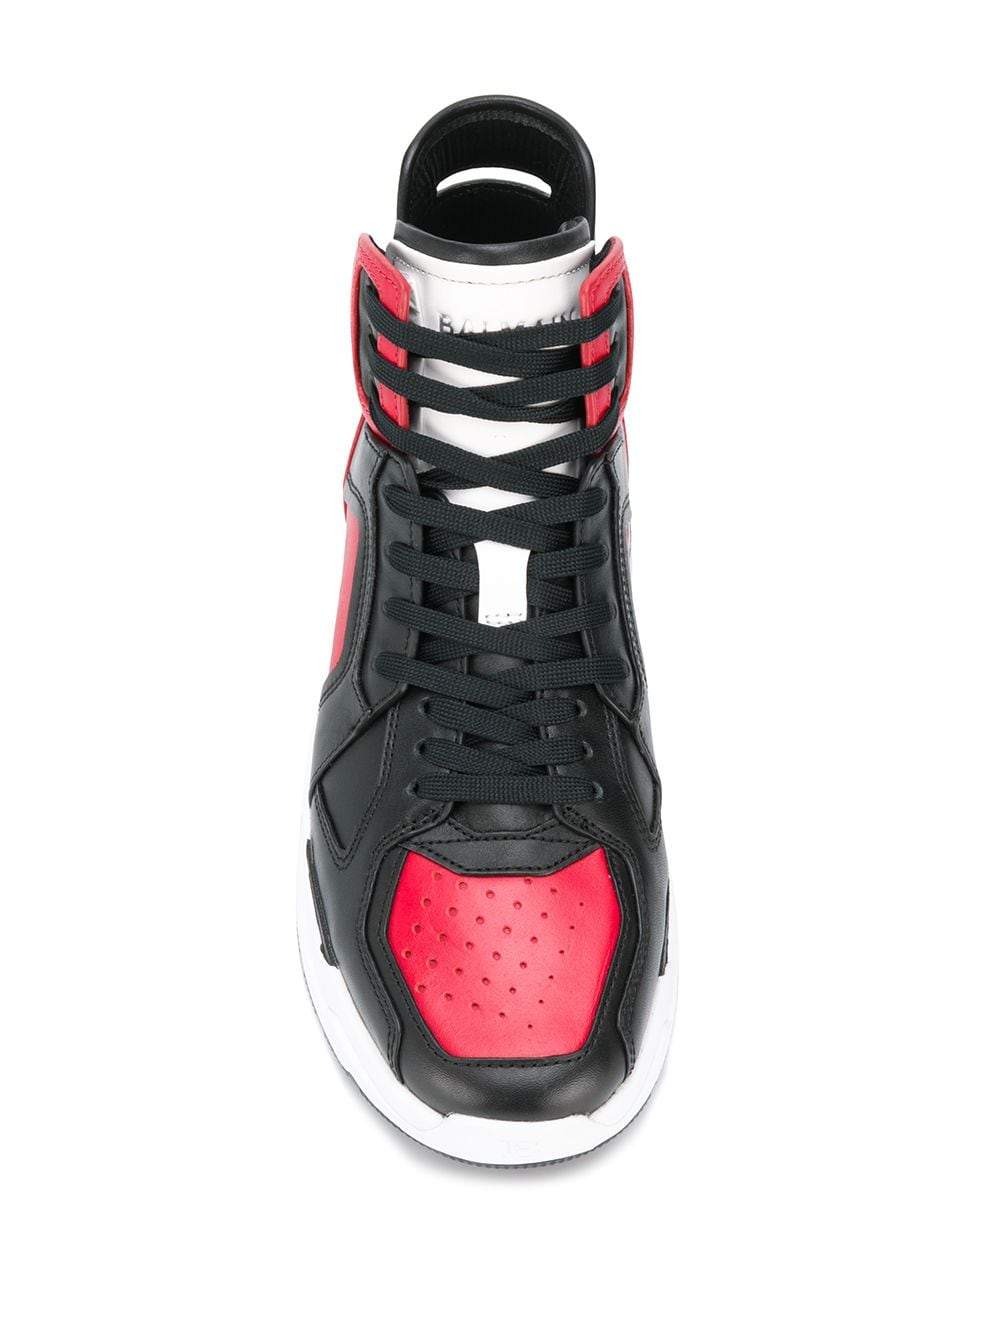 Balmain B-BALL sneakers black/red - MAISONDEFASHION.COM